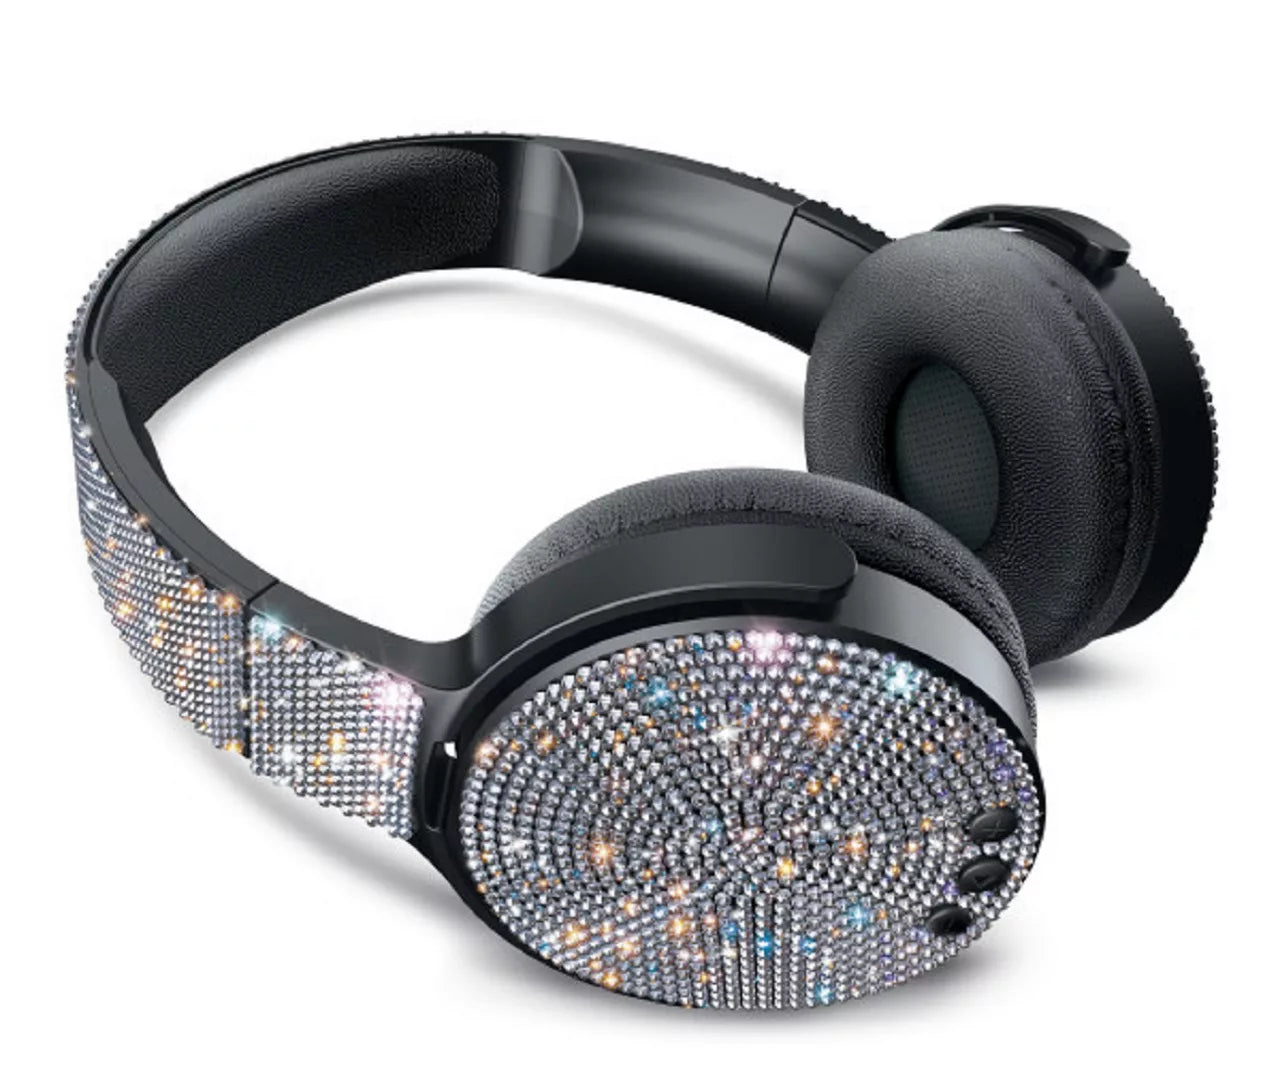 Art & Sound Headphones Silver,Black, Bright, Rhinestones Details